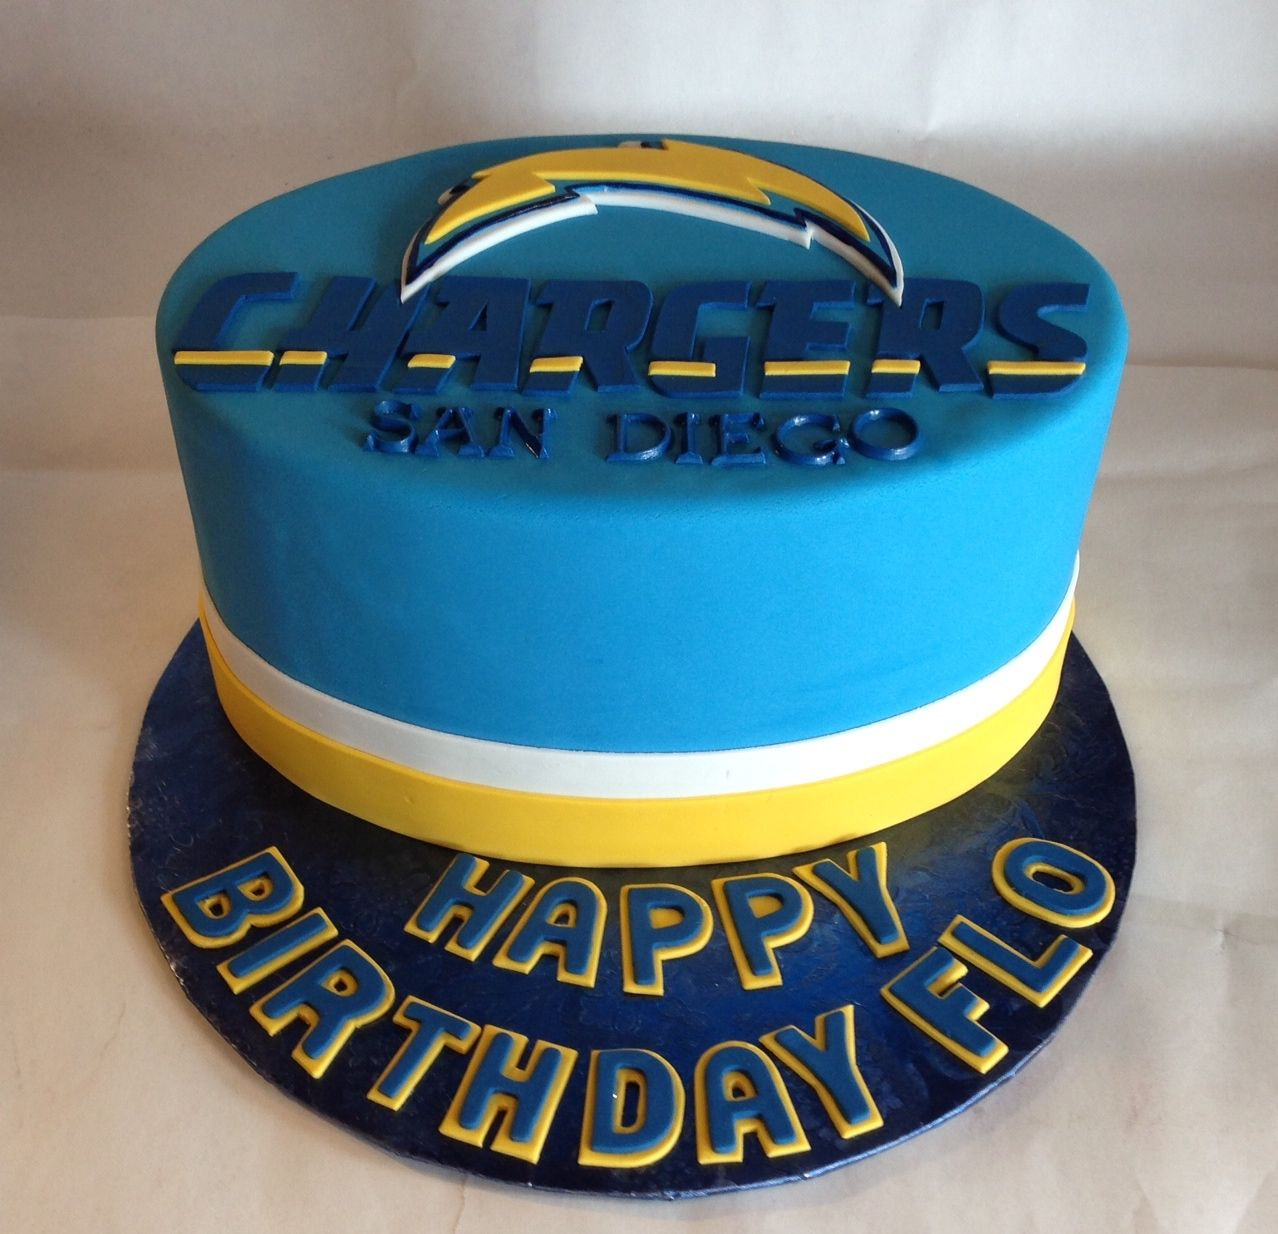 Birthday Cakes San Diego
 San Diego Chargers fondant cake